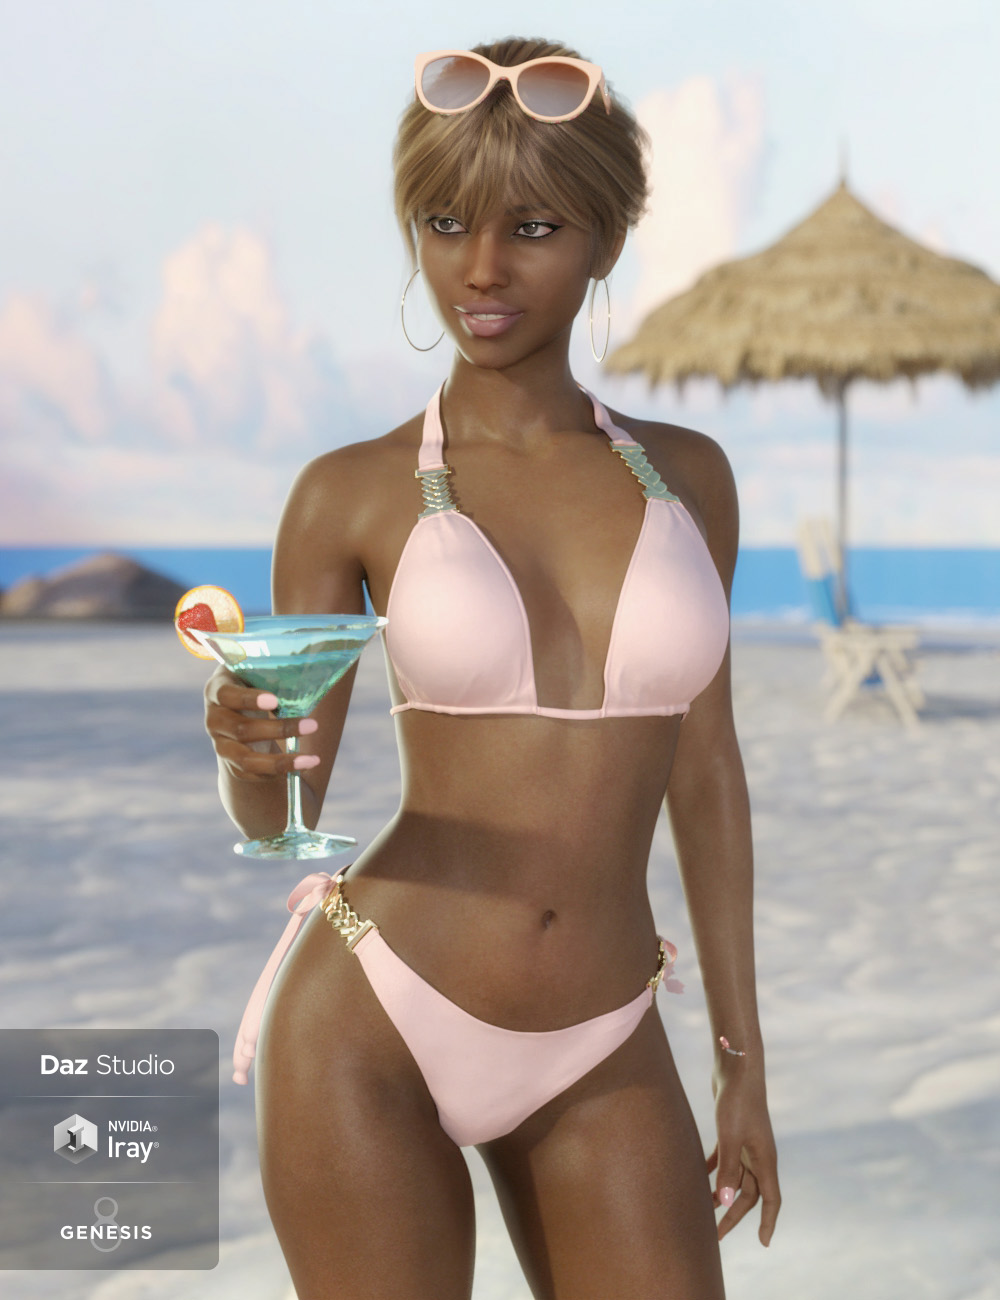 Ndidi for Darcy 8 by: Cherubit, 3D Models by Daz 3D